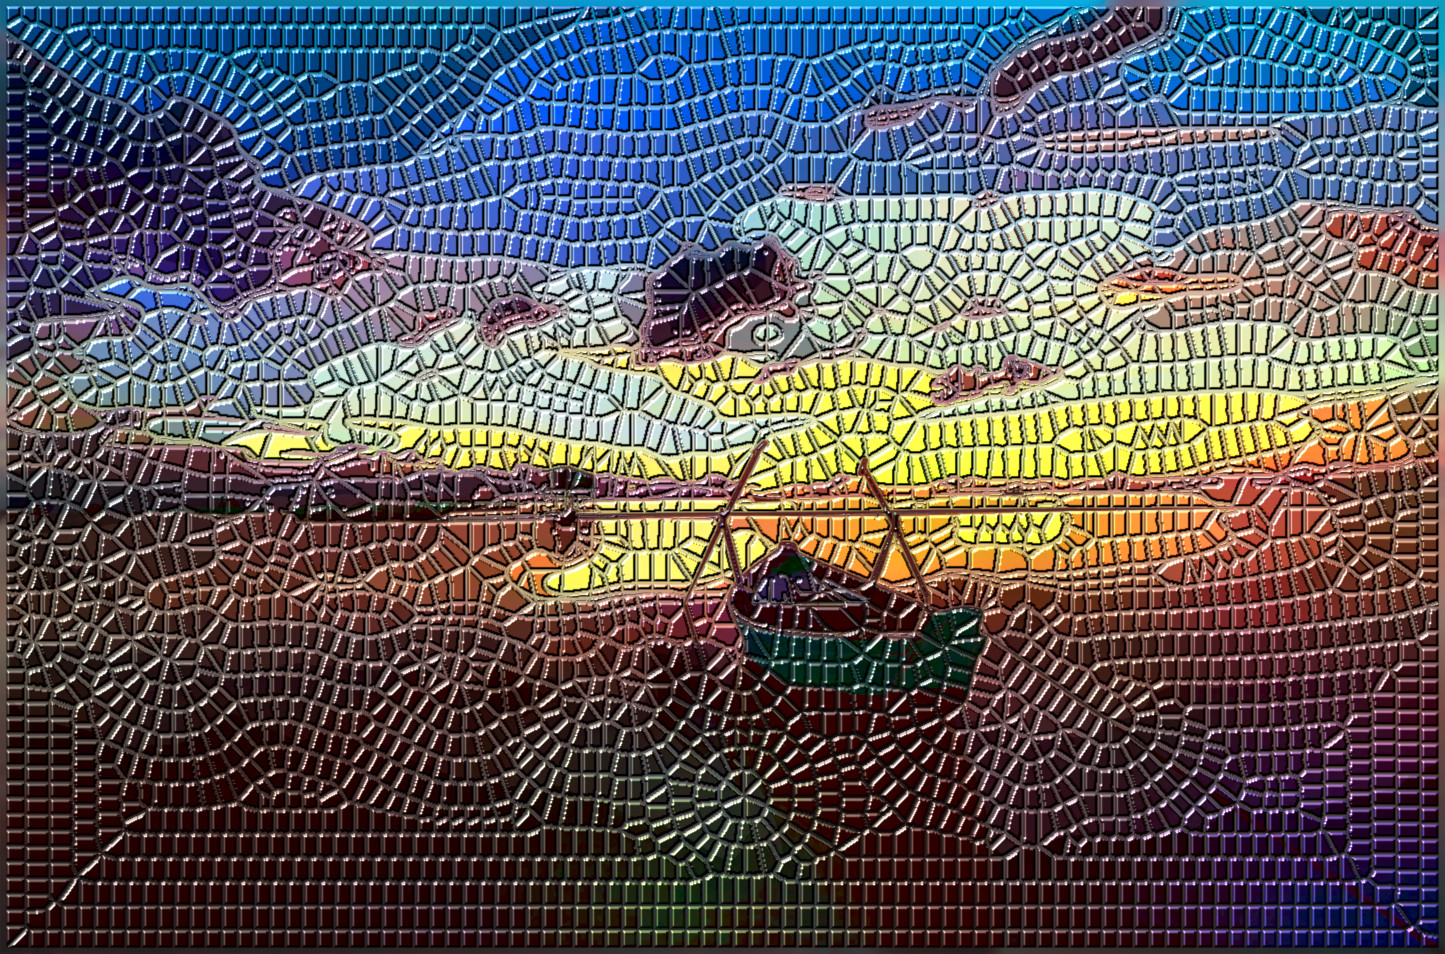 2023-09-15 05-57-30 sunrise-1014712_1920, as a Roman Mosaic  (parms=12,1,1,5,3,0,0,1) after equalize.jpeg